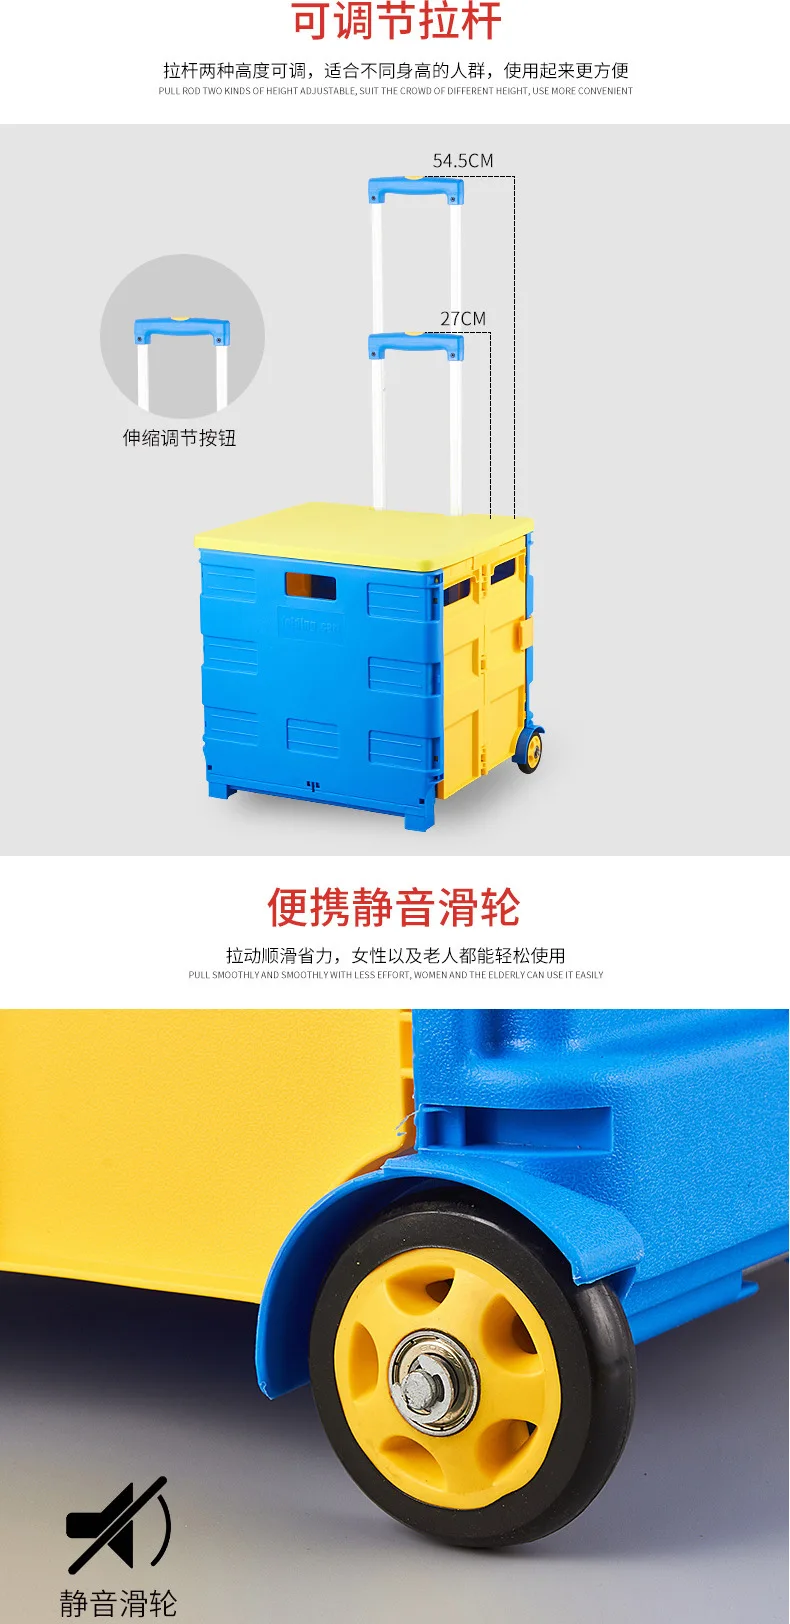 Large Size Folding Shopping Cart Plastic Box Car Gift Storage Luggage New Style Souvenirs Customizable Bar Portable